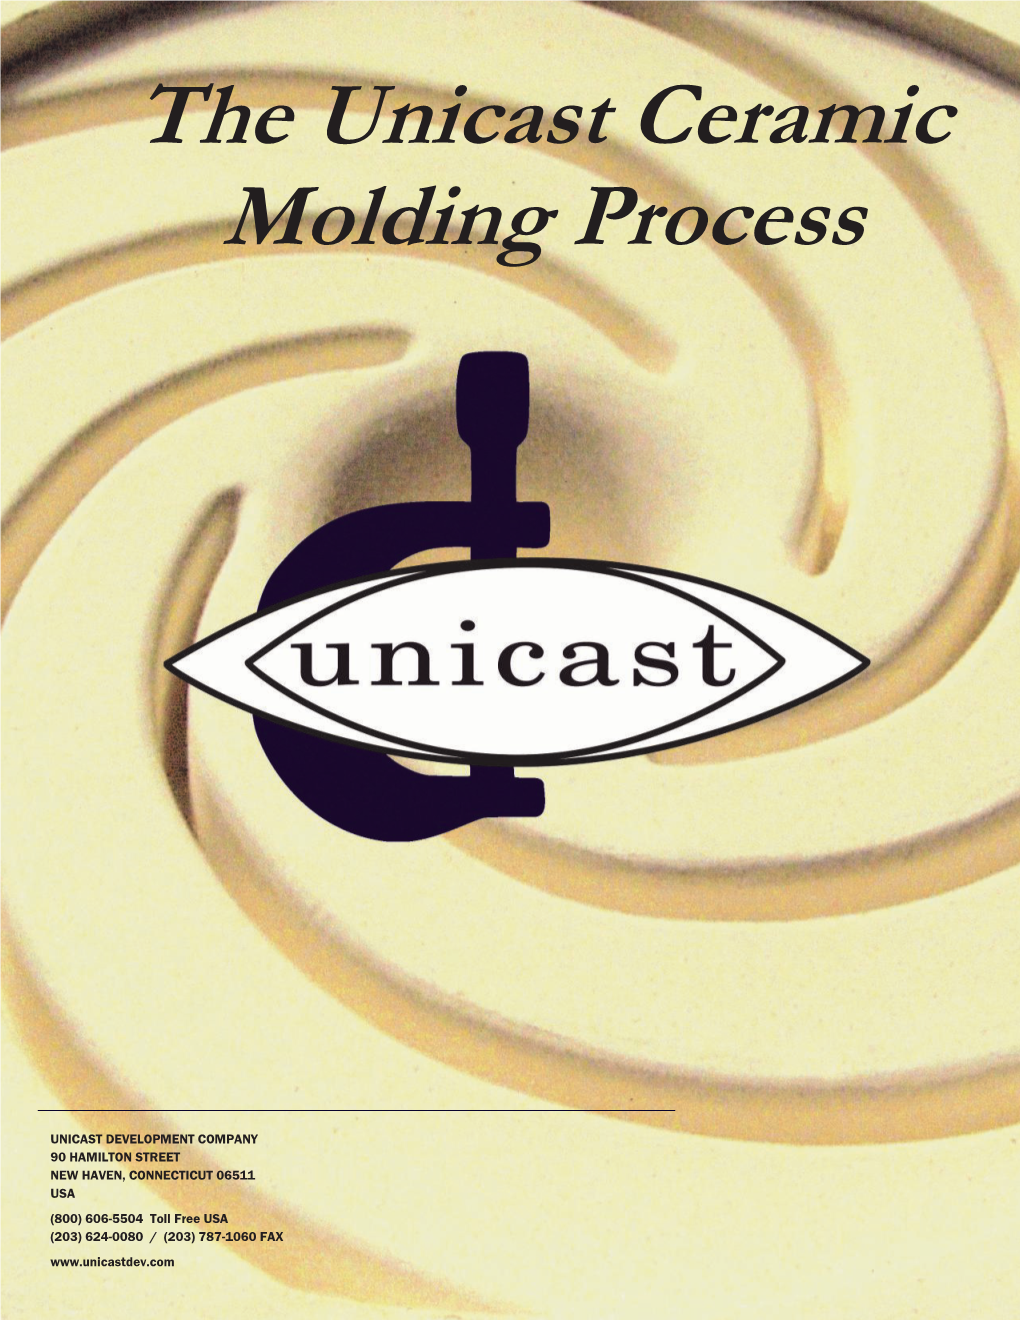 The Unicast Ceramic Molding Process